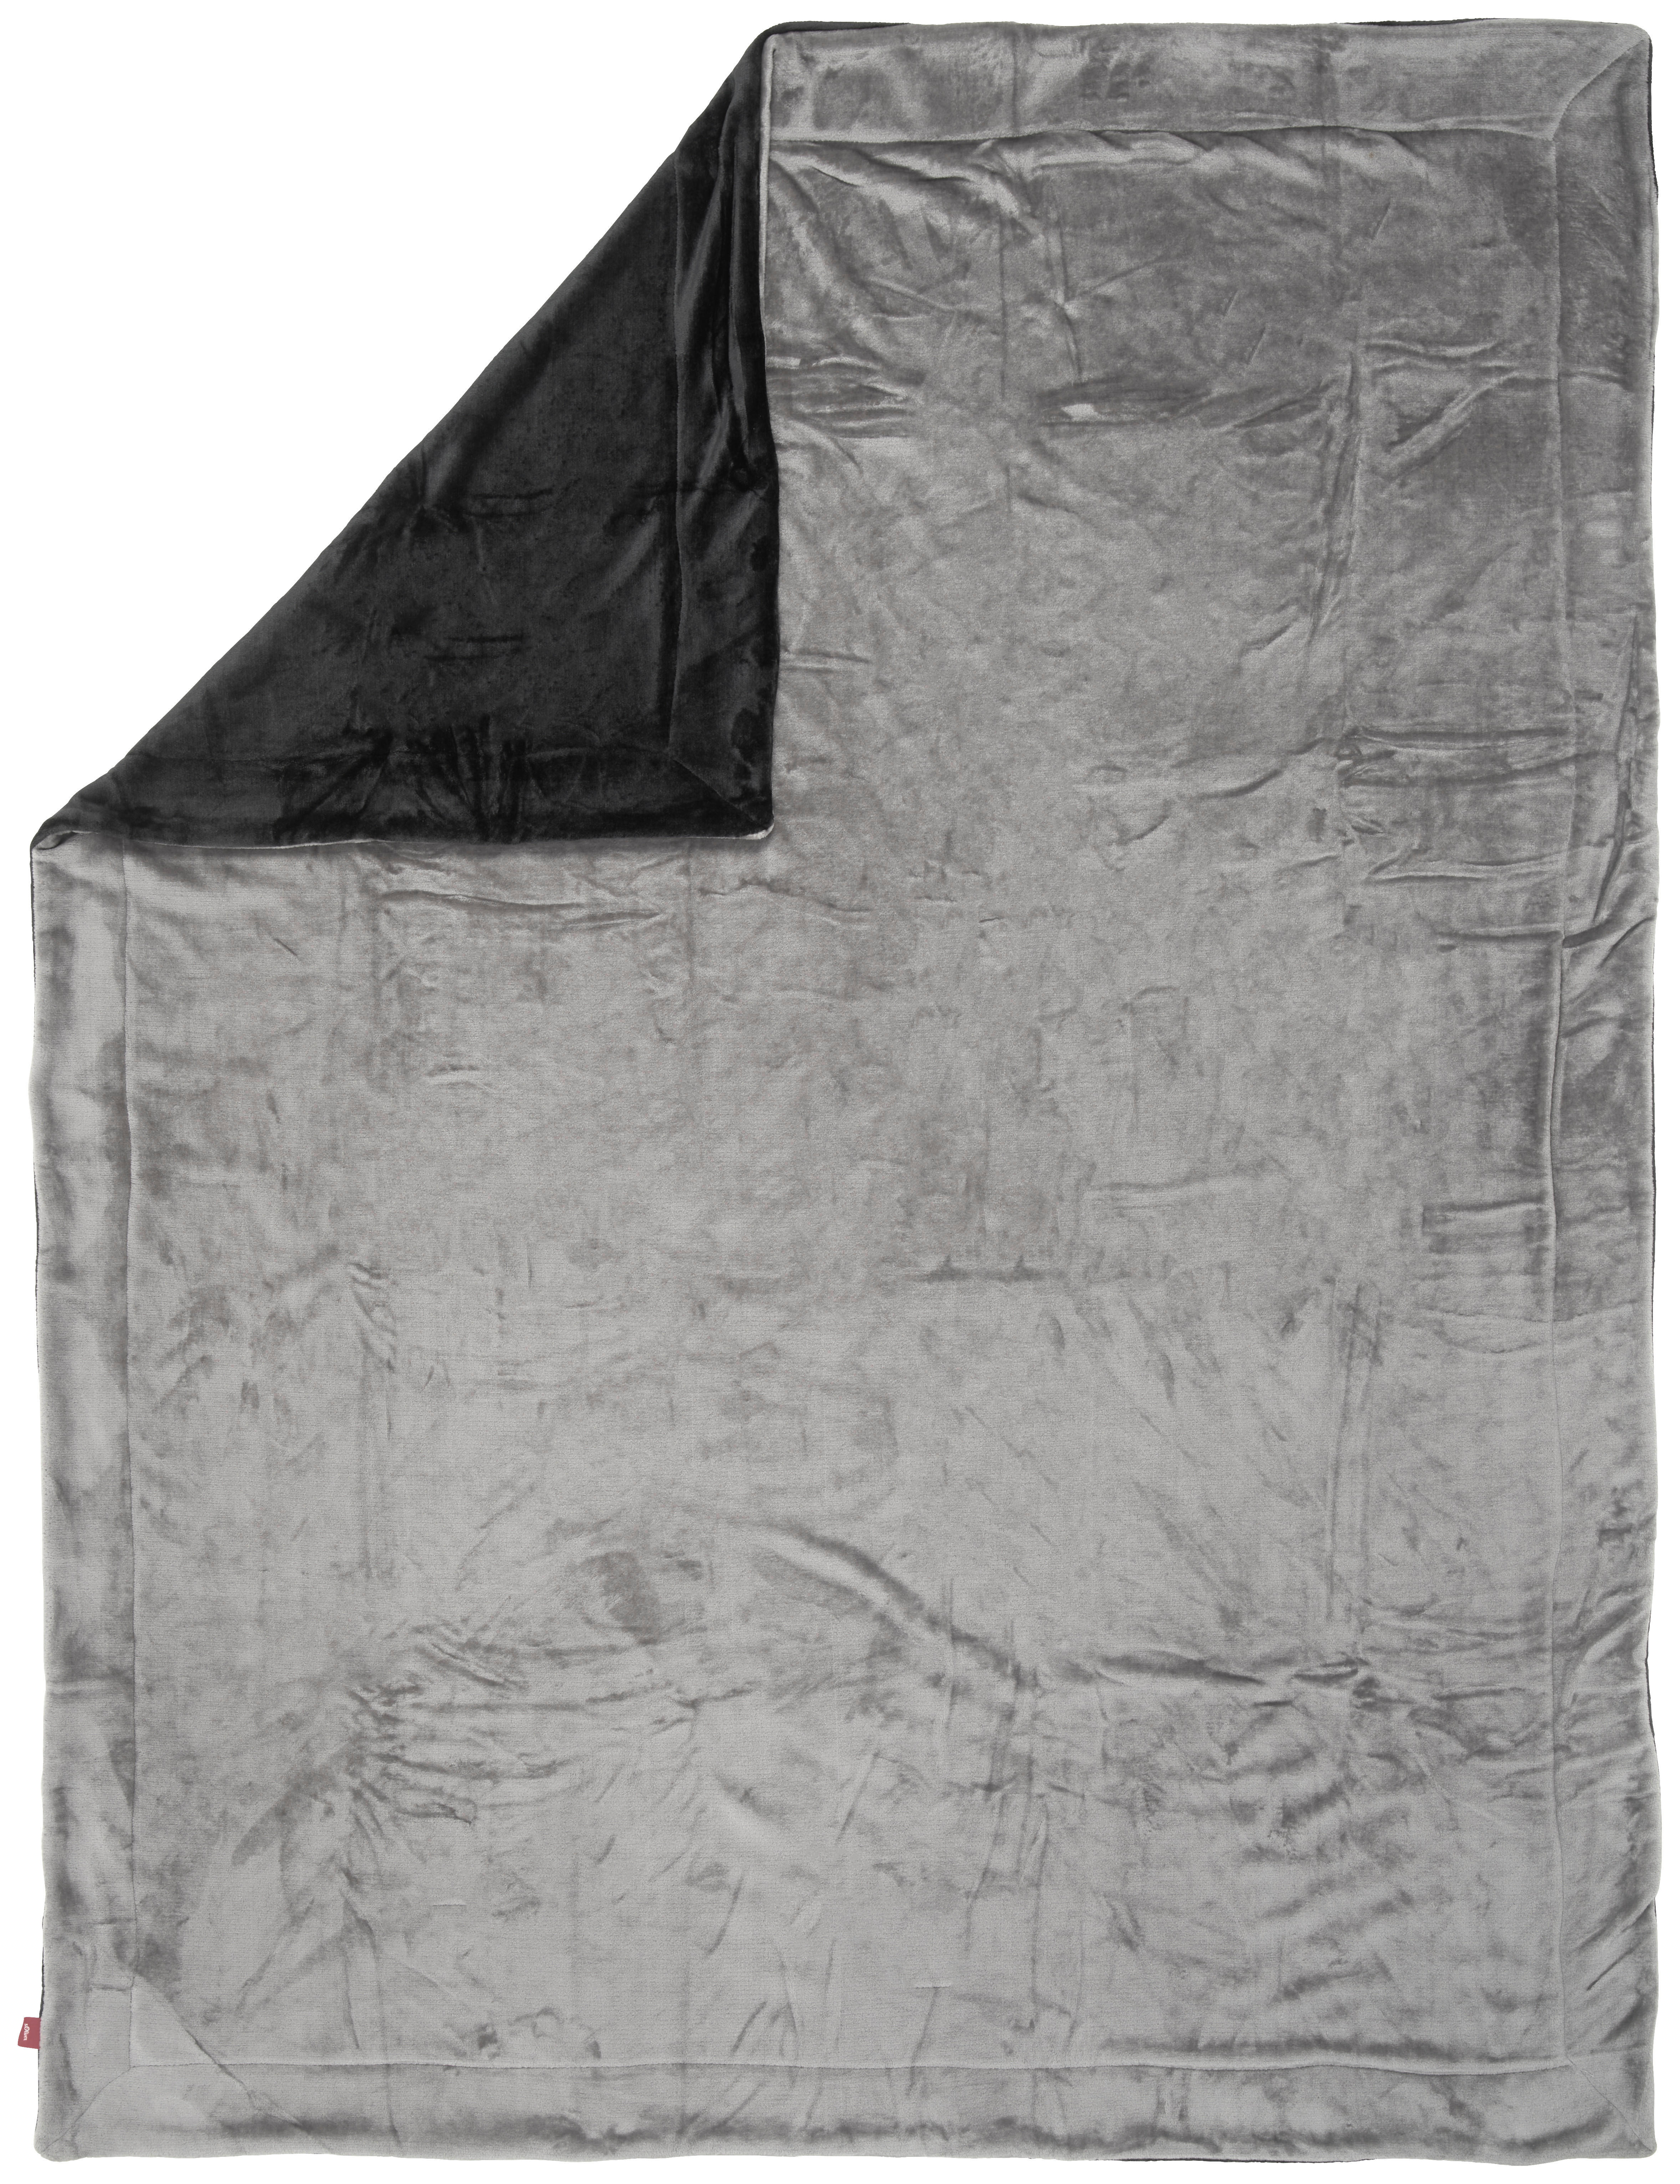 DECKE Double Soft  - Dunkelgrau/Grau, KONVENTIONELL, Textil (150/200cm) - S. Oliver